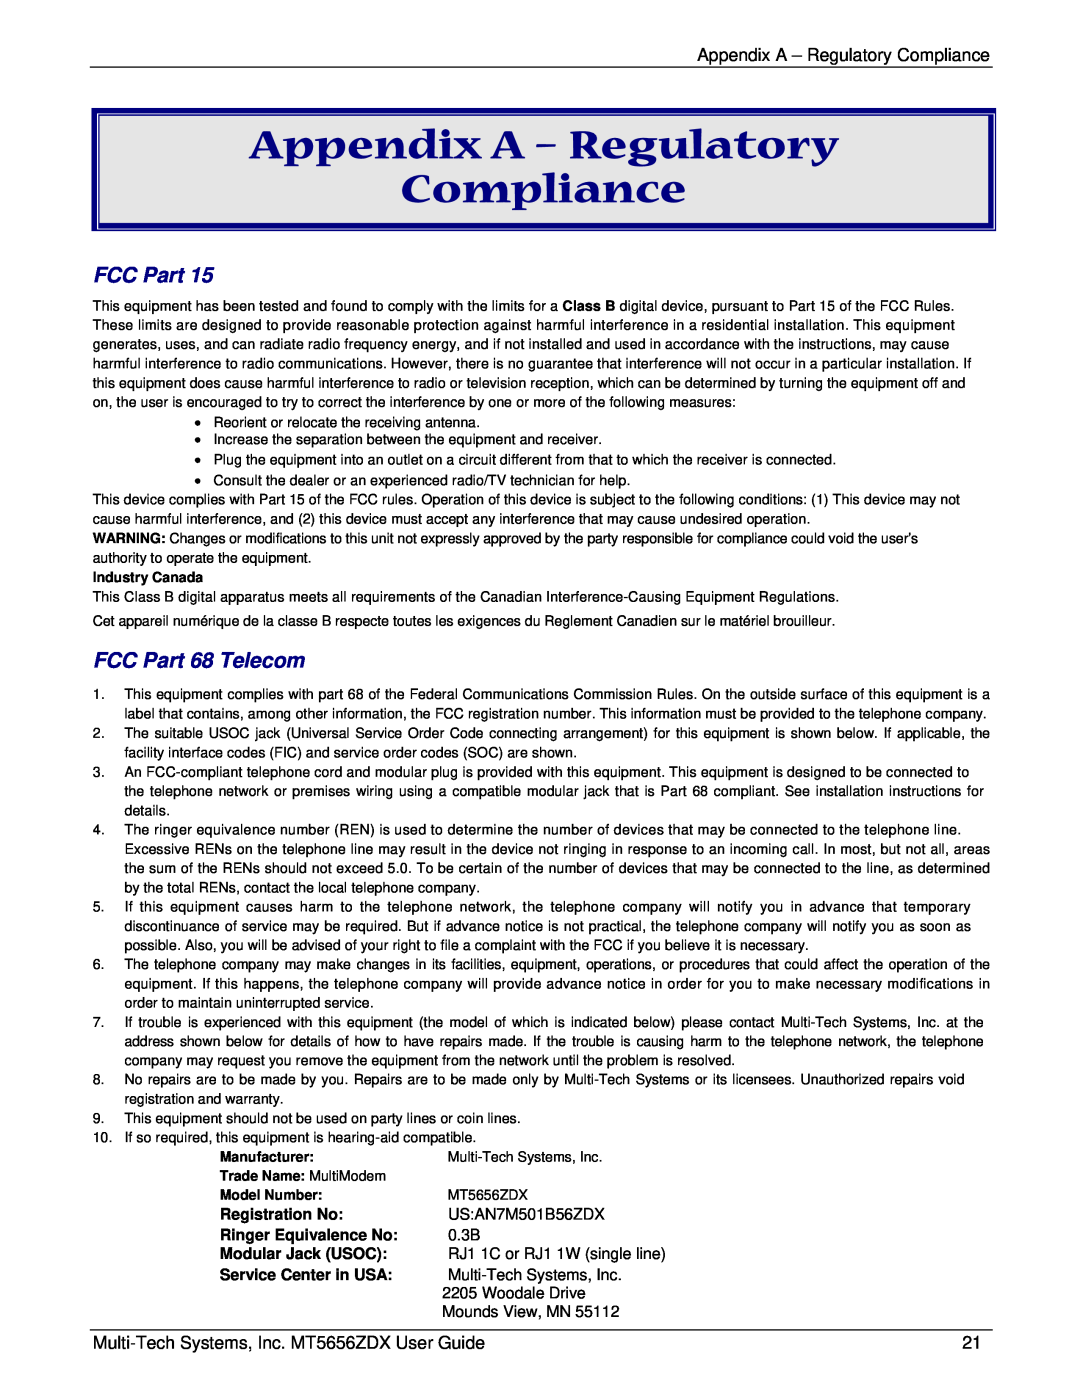 Multi Tech Equipment MT5656ZDX manual Appendix A - Regulatory Compliance, FCC Part 68 Telecom, Registration No, 0.3B 